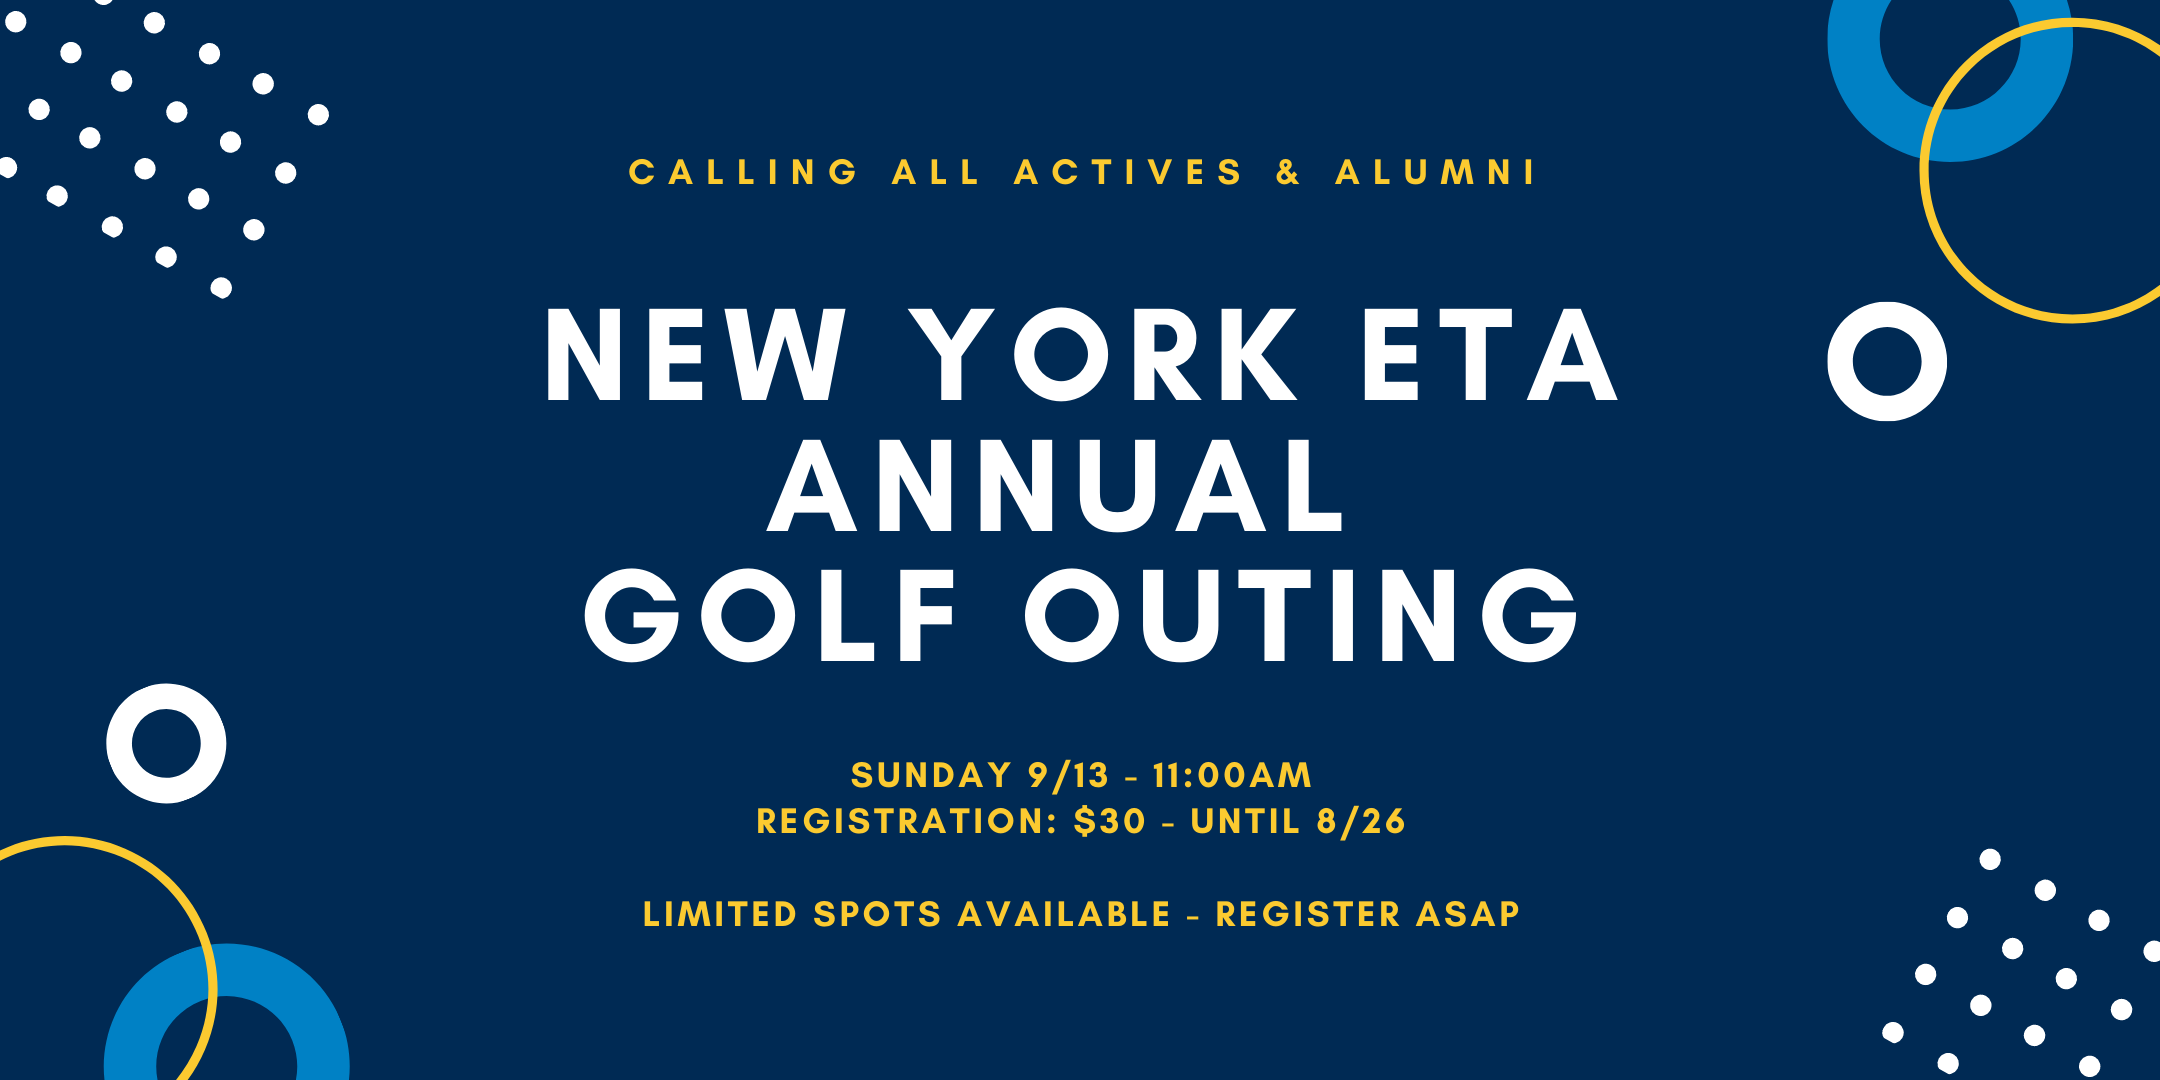 New York Eta Annual Golf Outing